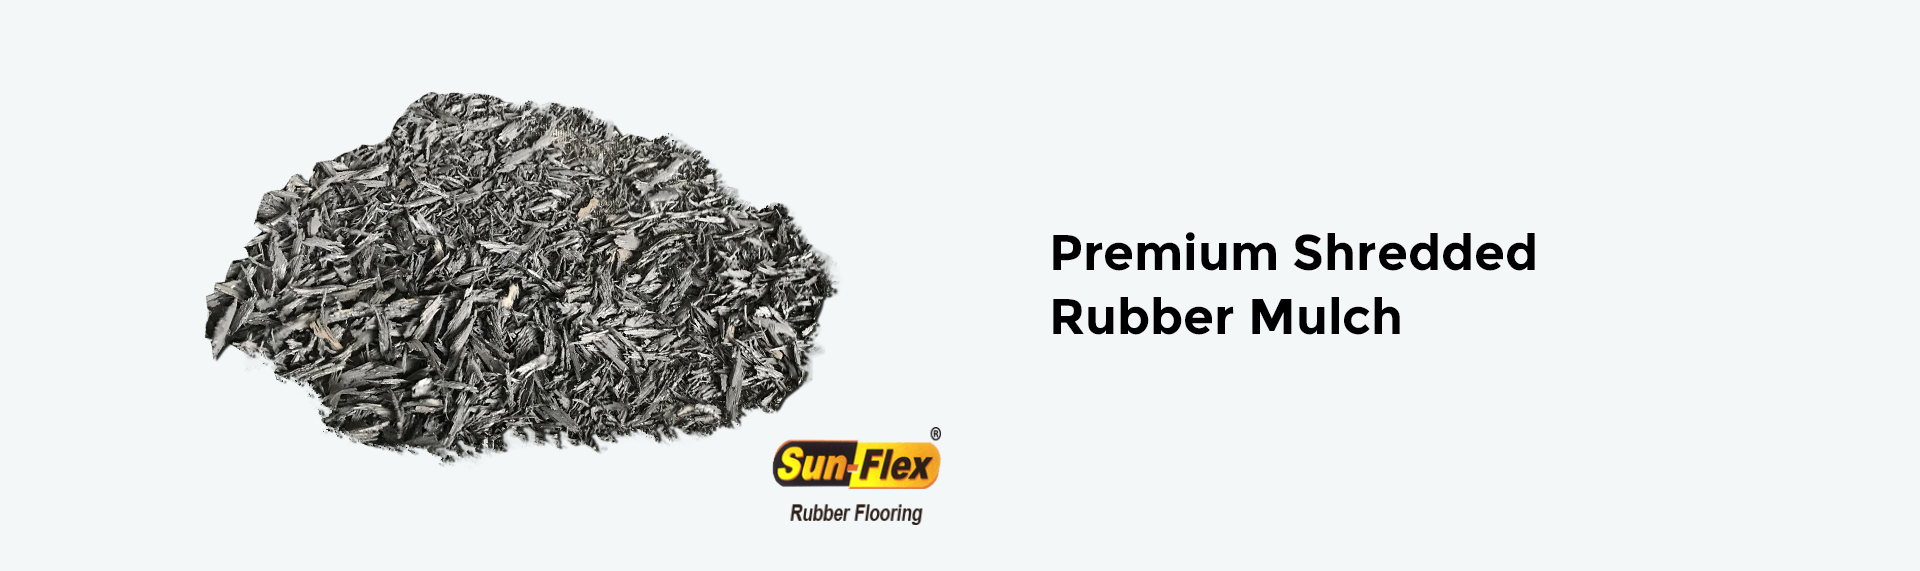 Premium-Shredded-Rubber-Mulch